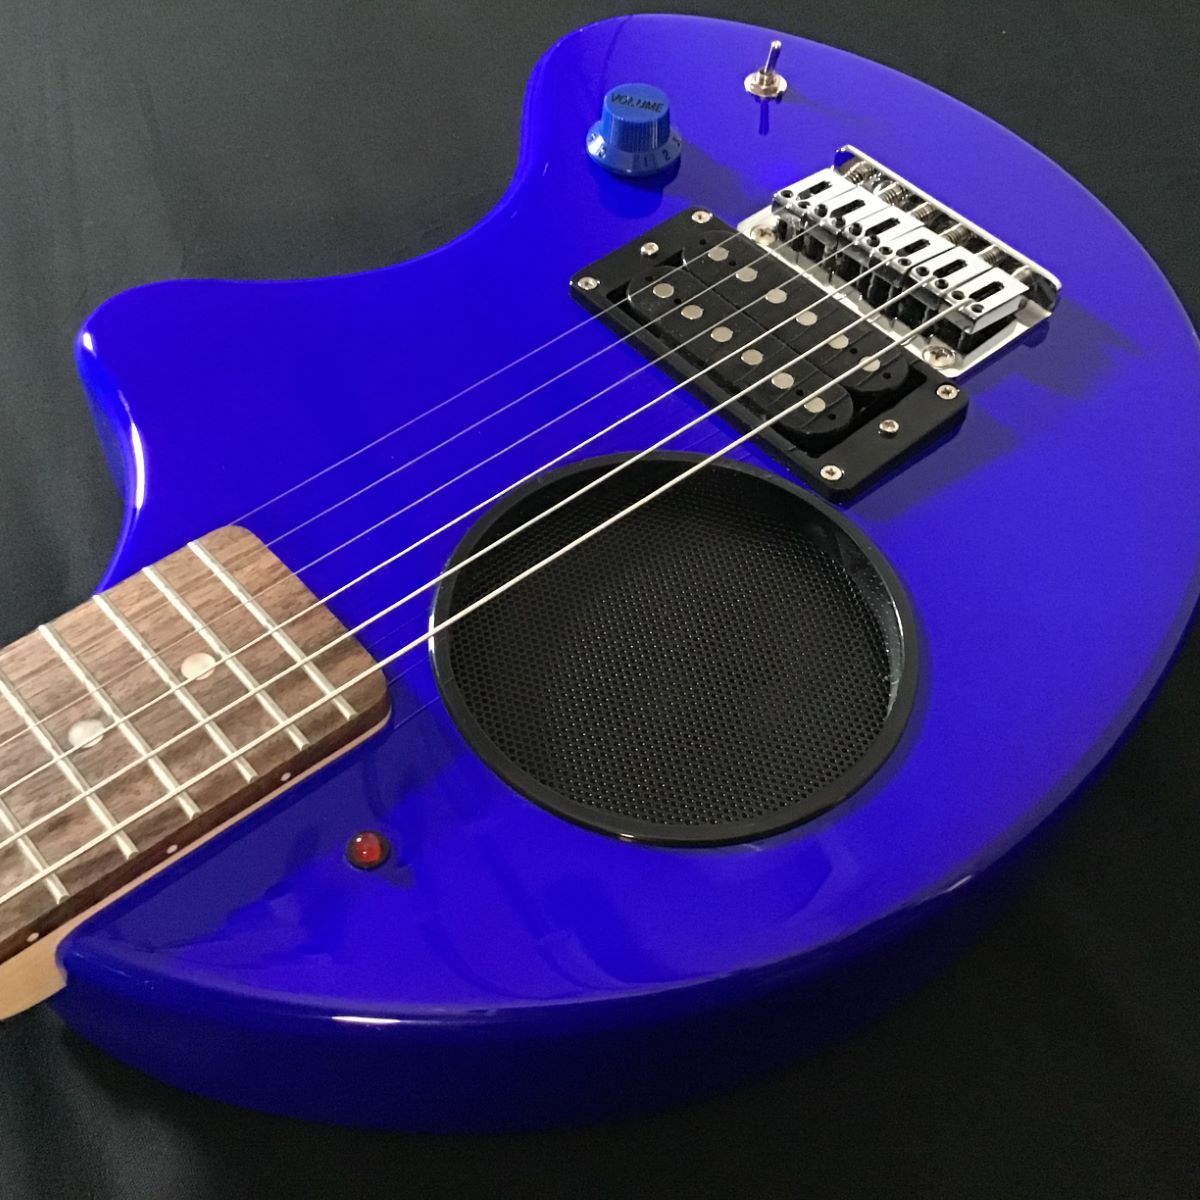 FERNANDES ZO-3 BLUE スピーカー内蔵ミニエレキギター ブルー ソフト 